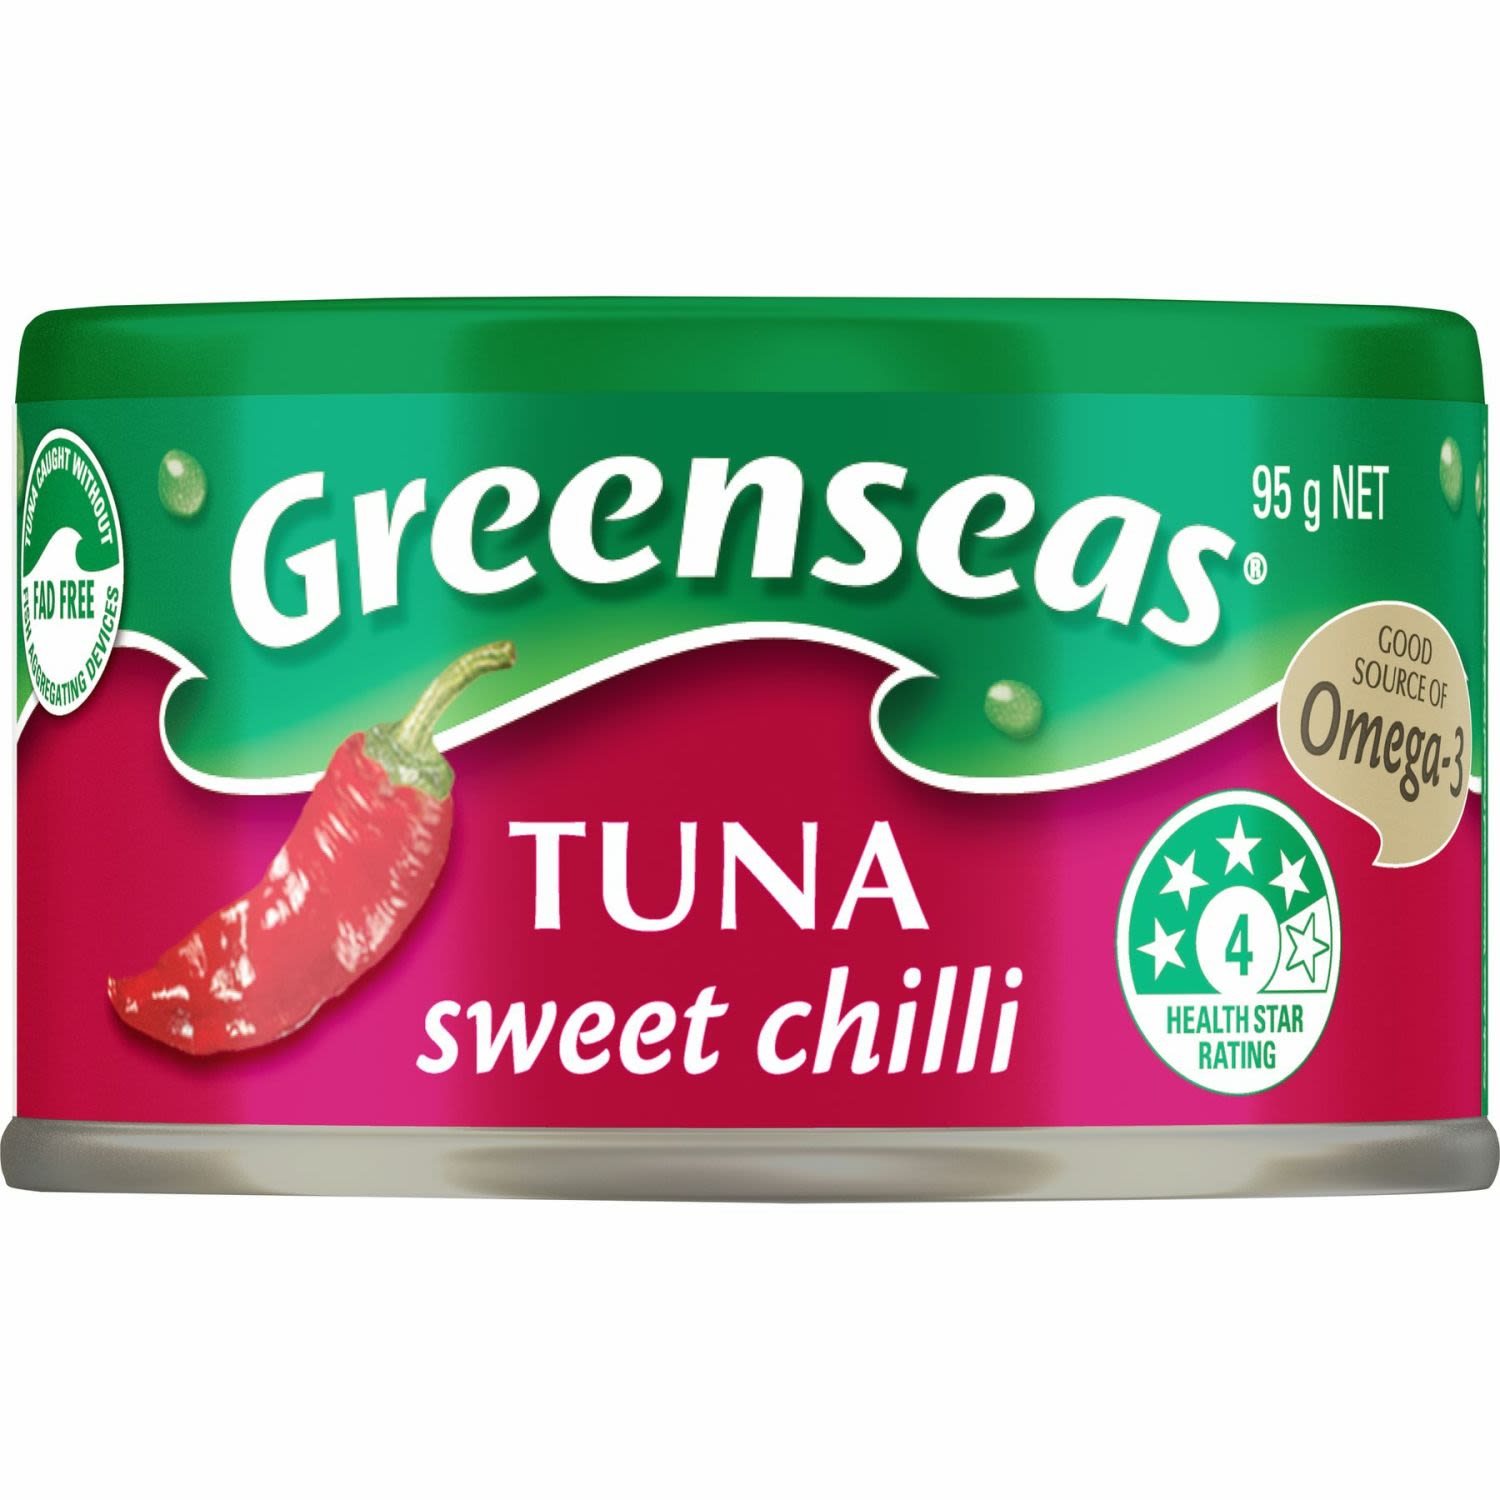 Greenseas Tuna Sweet Chilli, 95 Gram